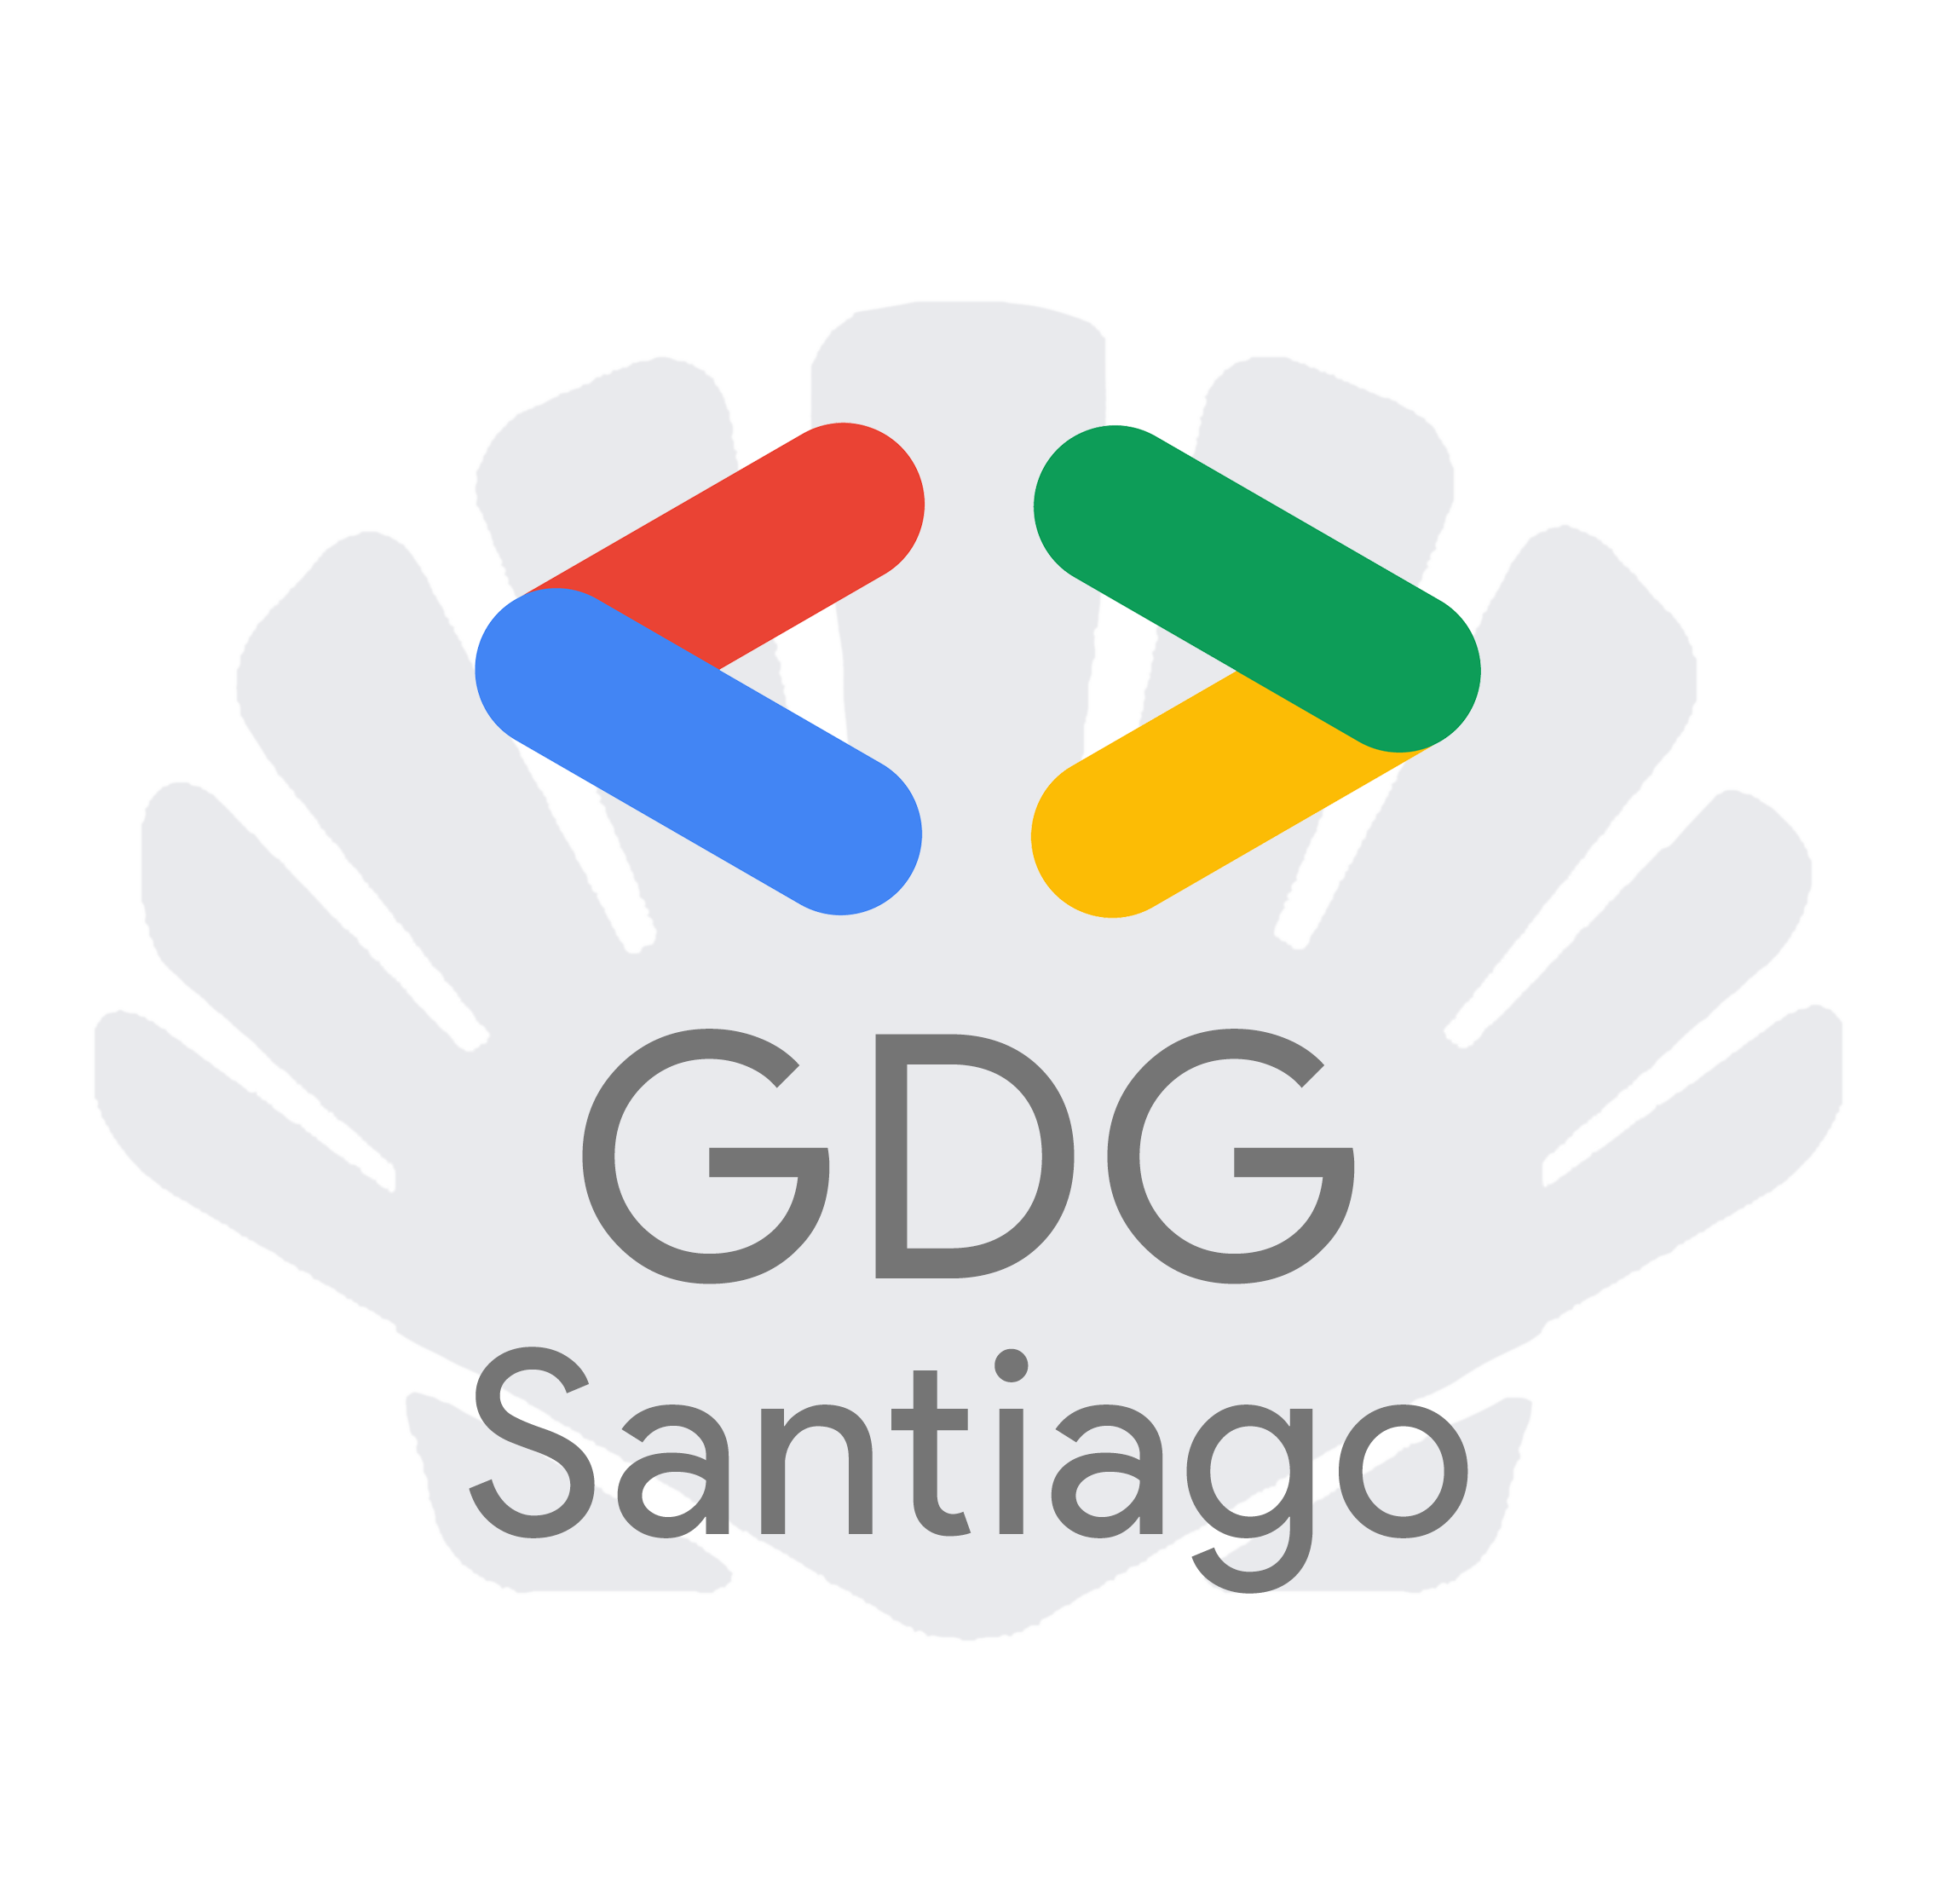 GDG Santiago